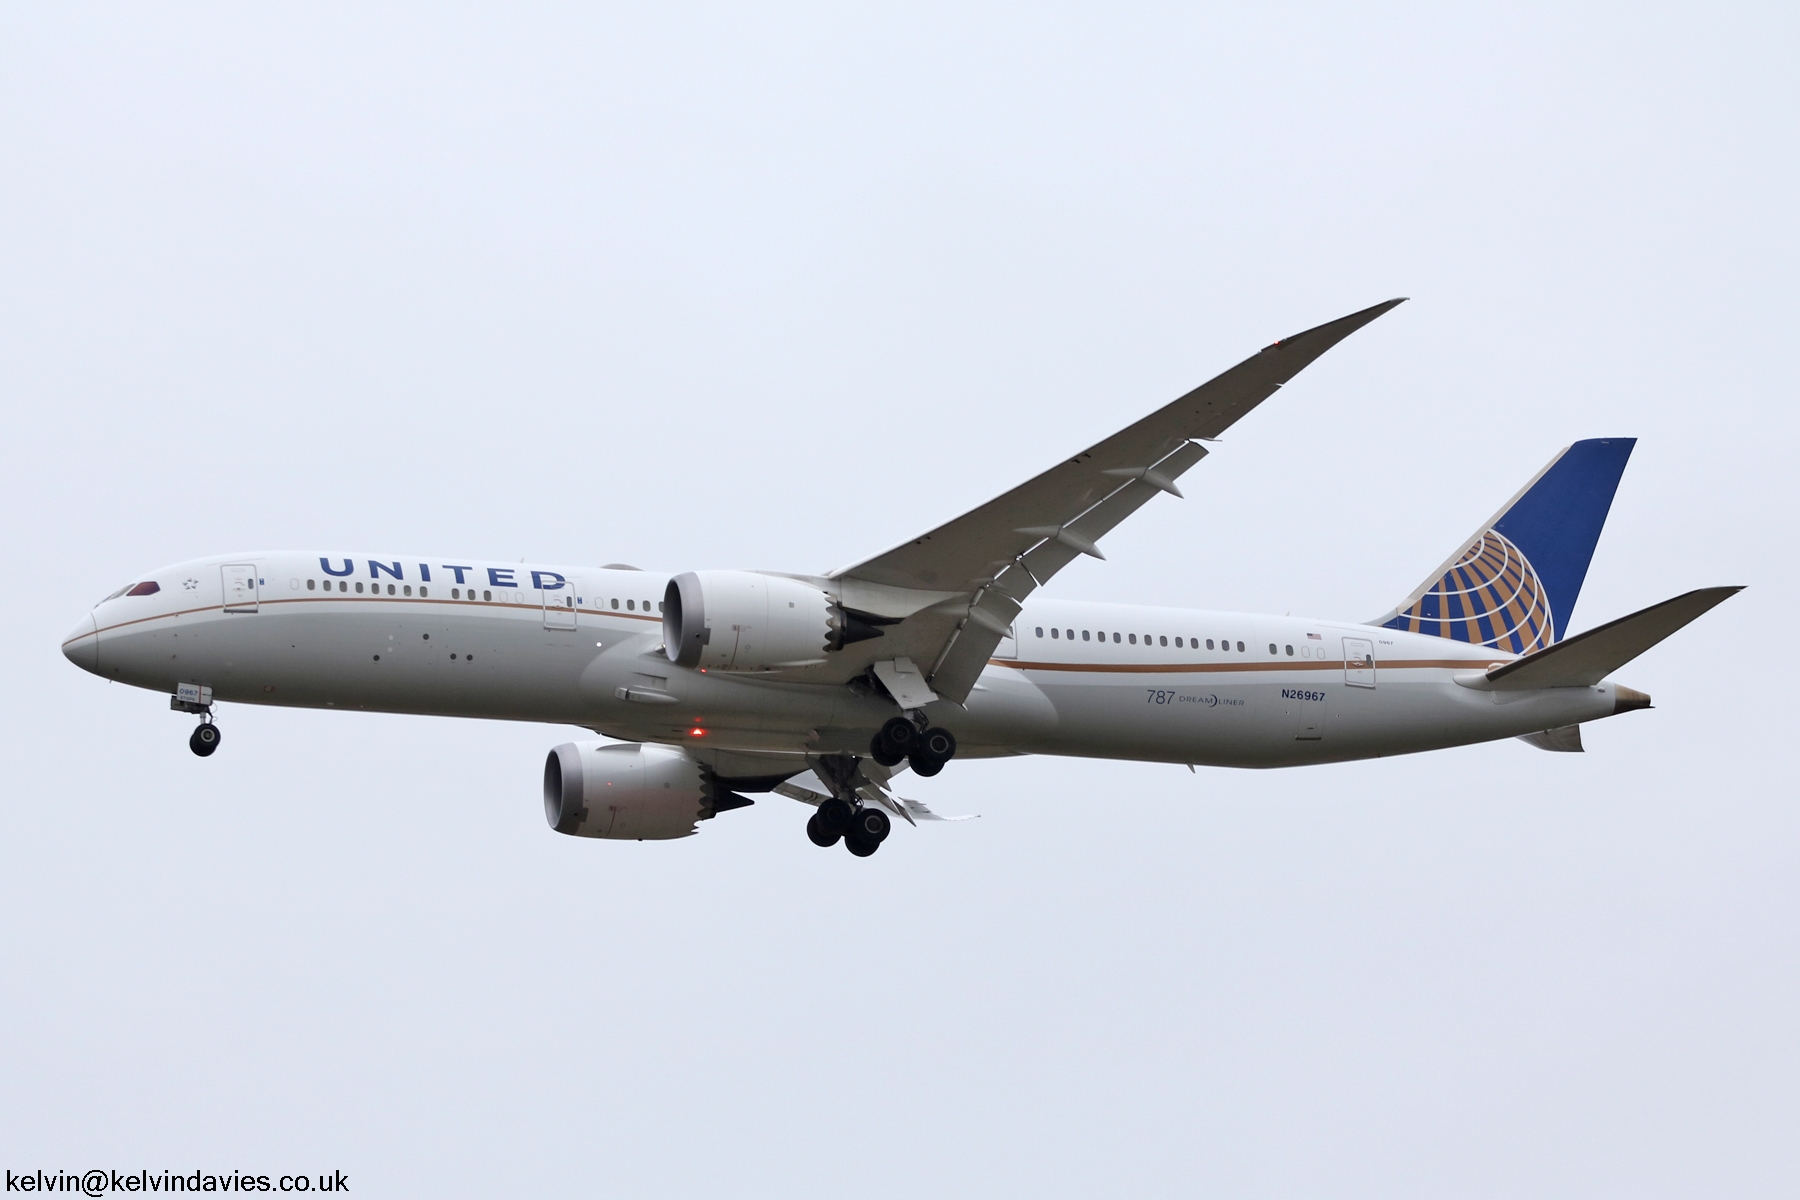 United Airlines 787 N26967